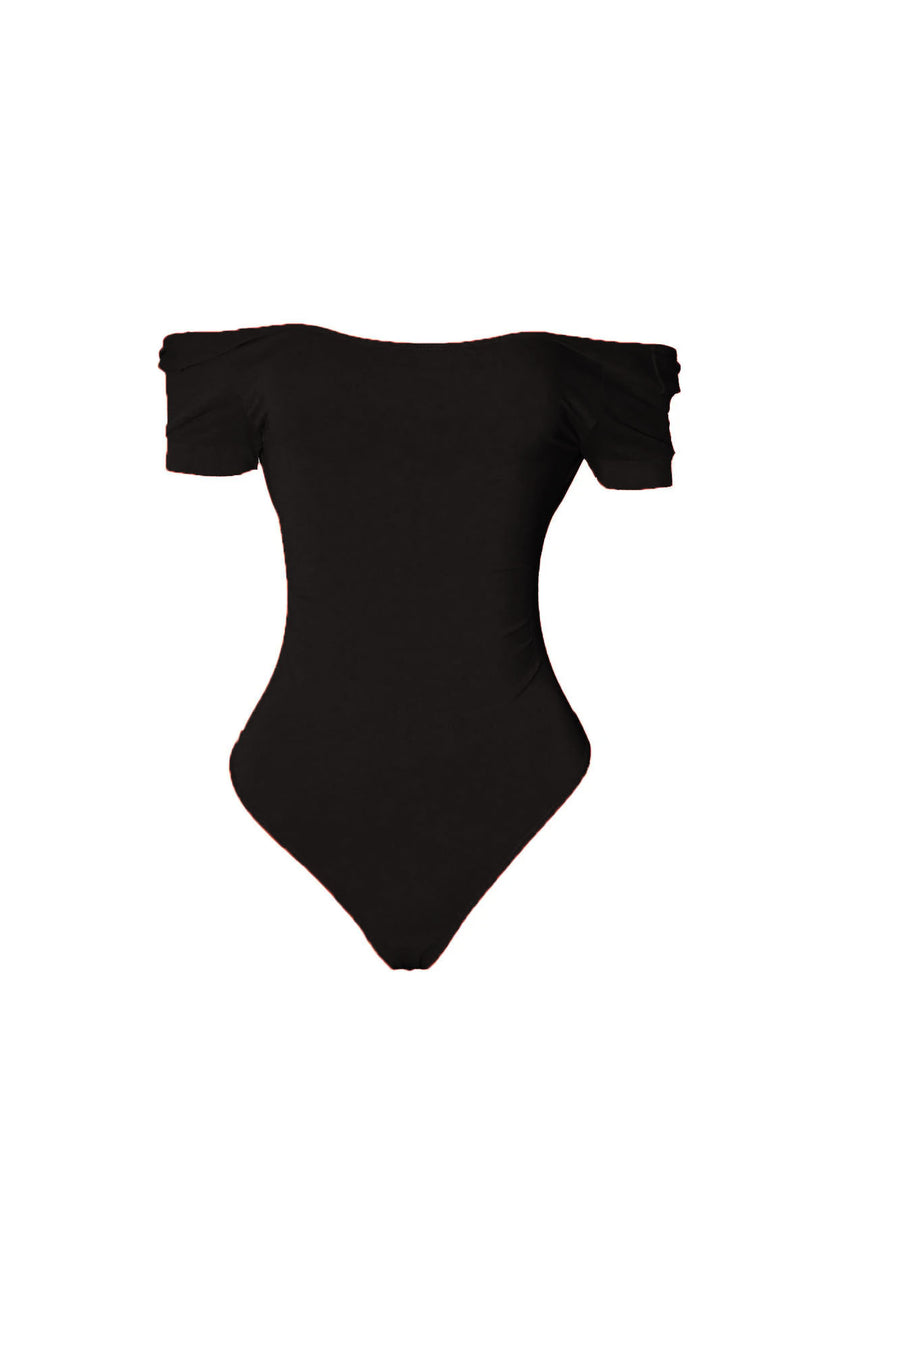 Black Short Sleeve Body By Babes Thong Bodysuit